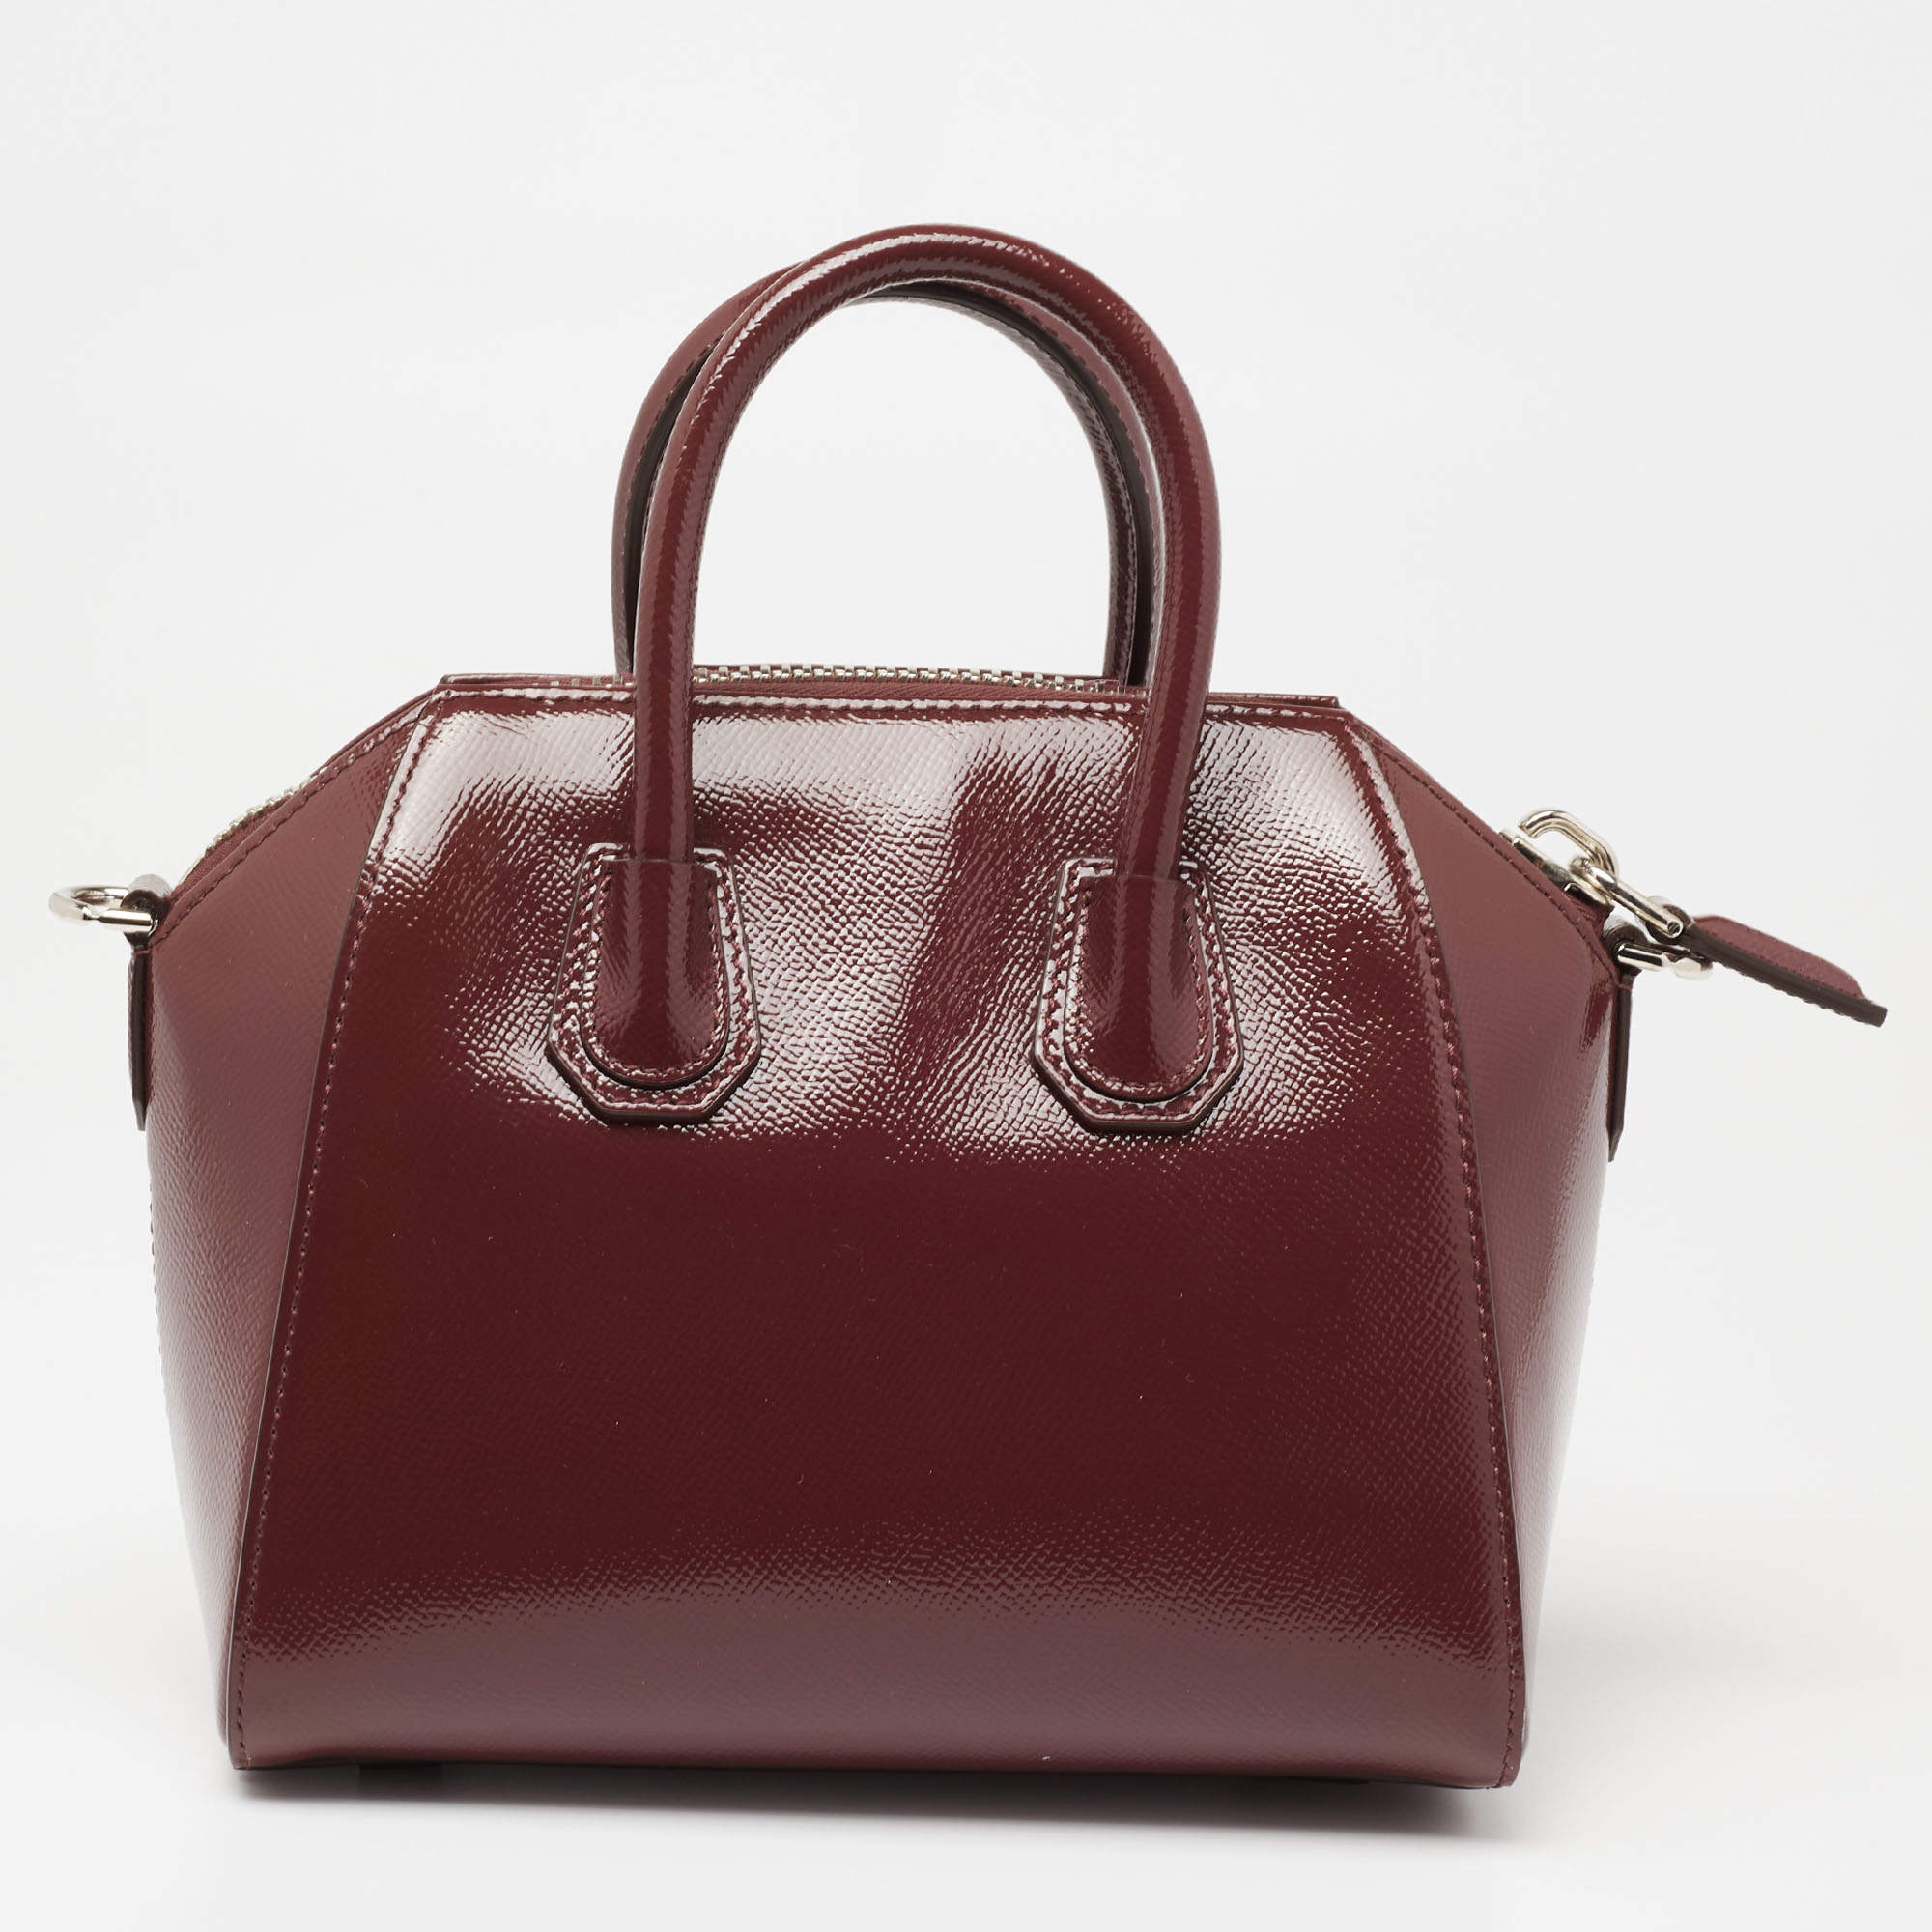 Givenchy Antigona Cognac Satchel #bags